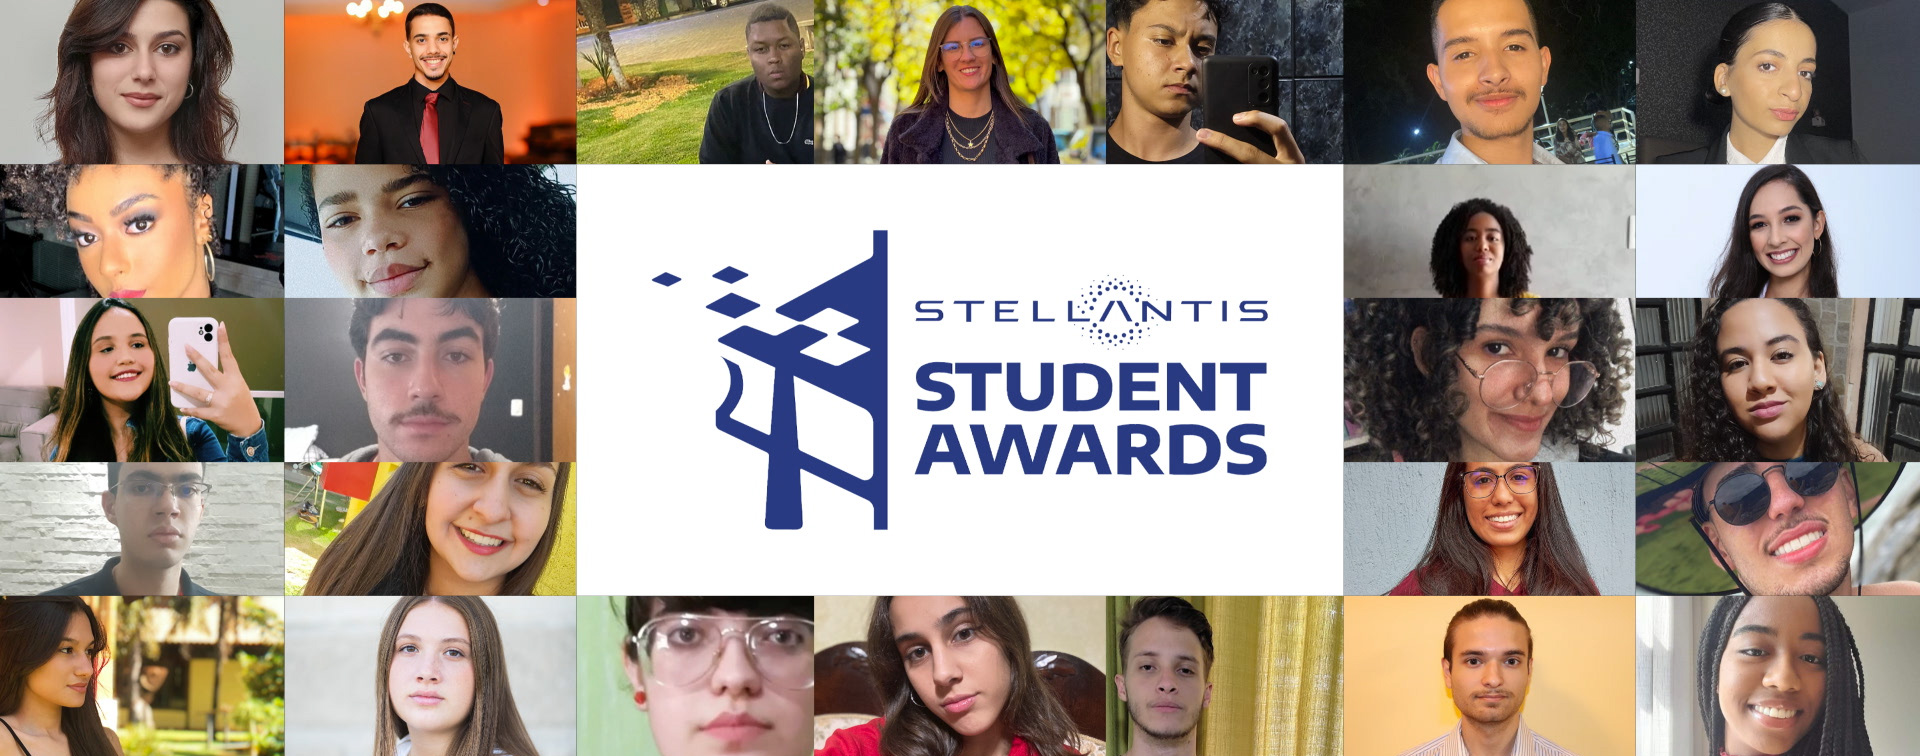 Stellantis Student Awards Illustration